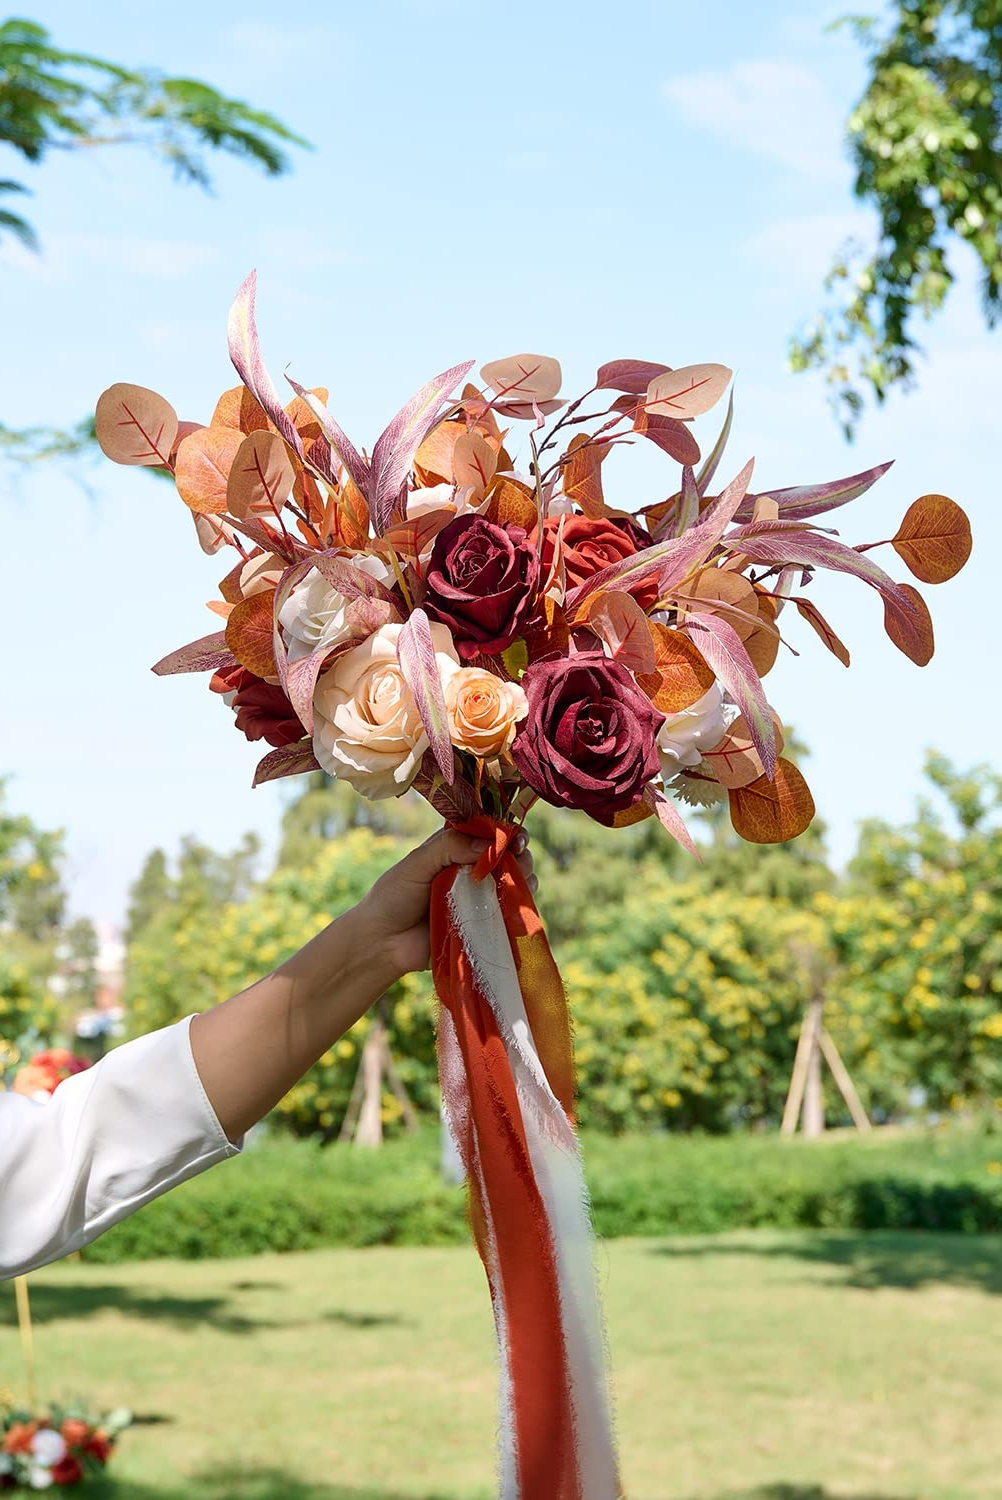 Fake Floral Artificial Flowers DIY Wedding Bouquet Box Set HH8016